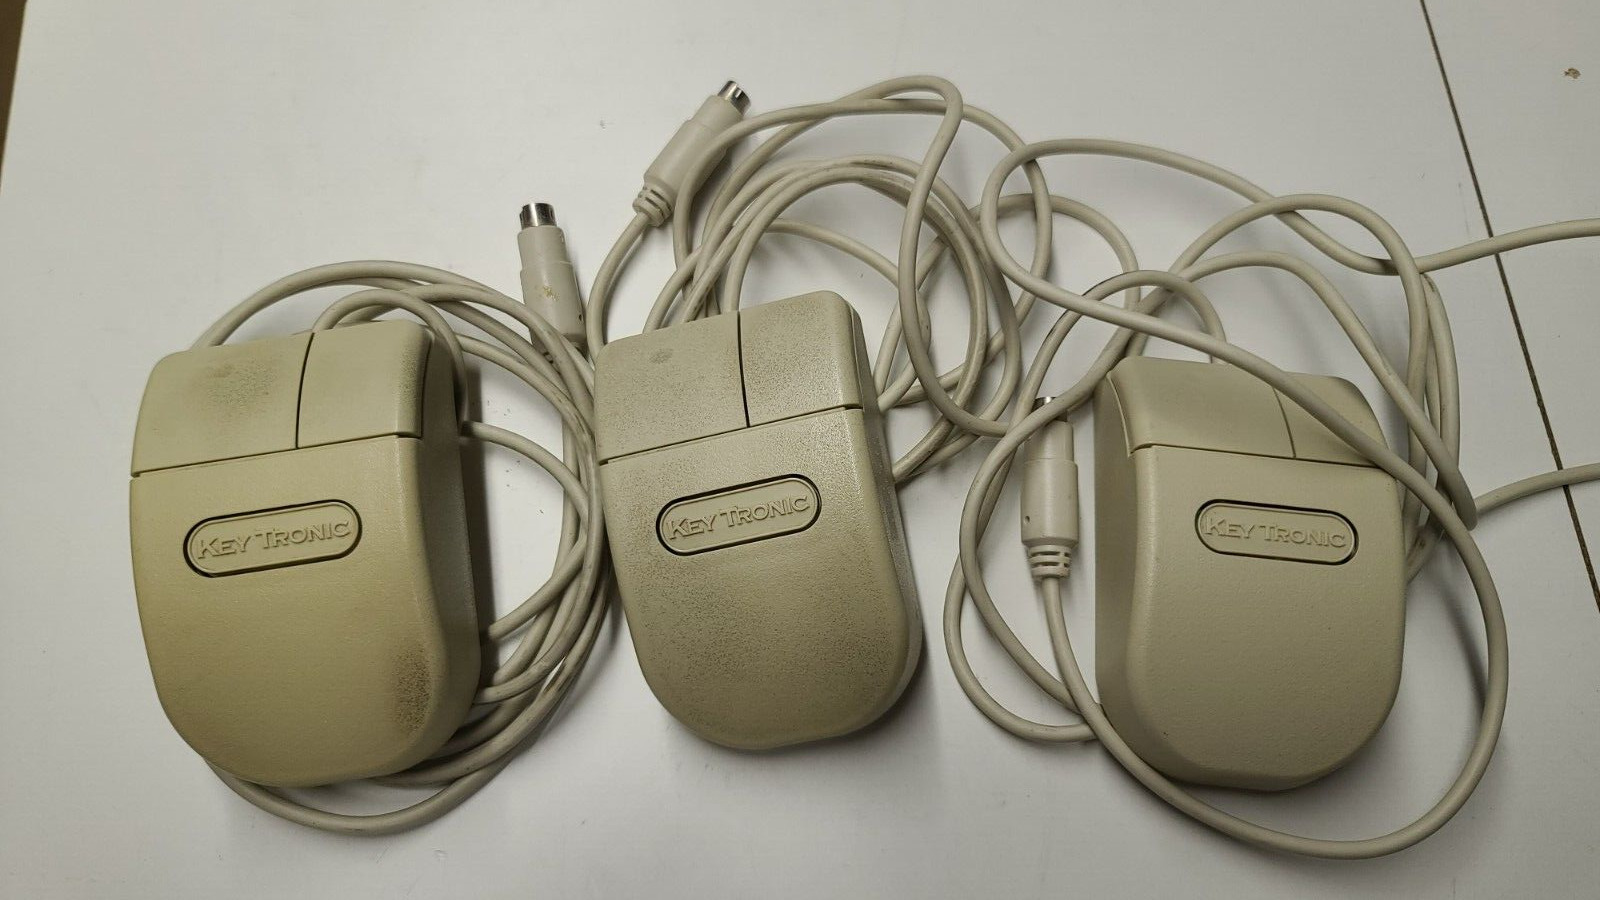 LOT OF 3  Vintage Keytronic Mice 2HW73-1EP